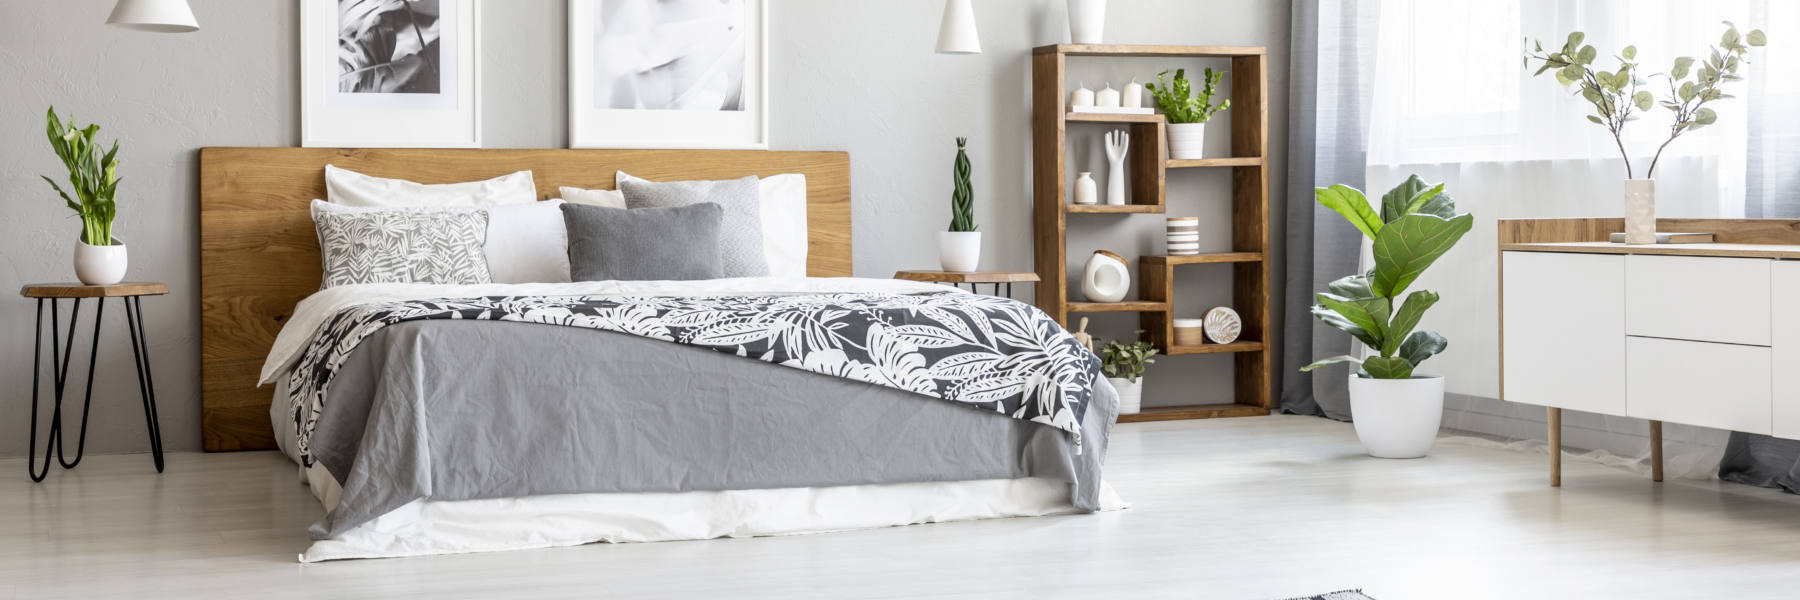 Gray neutral layered bedroom decor - photo courtesy of Bigstock